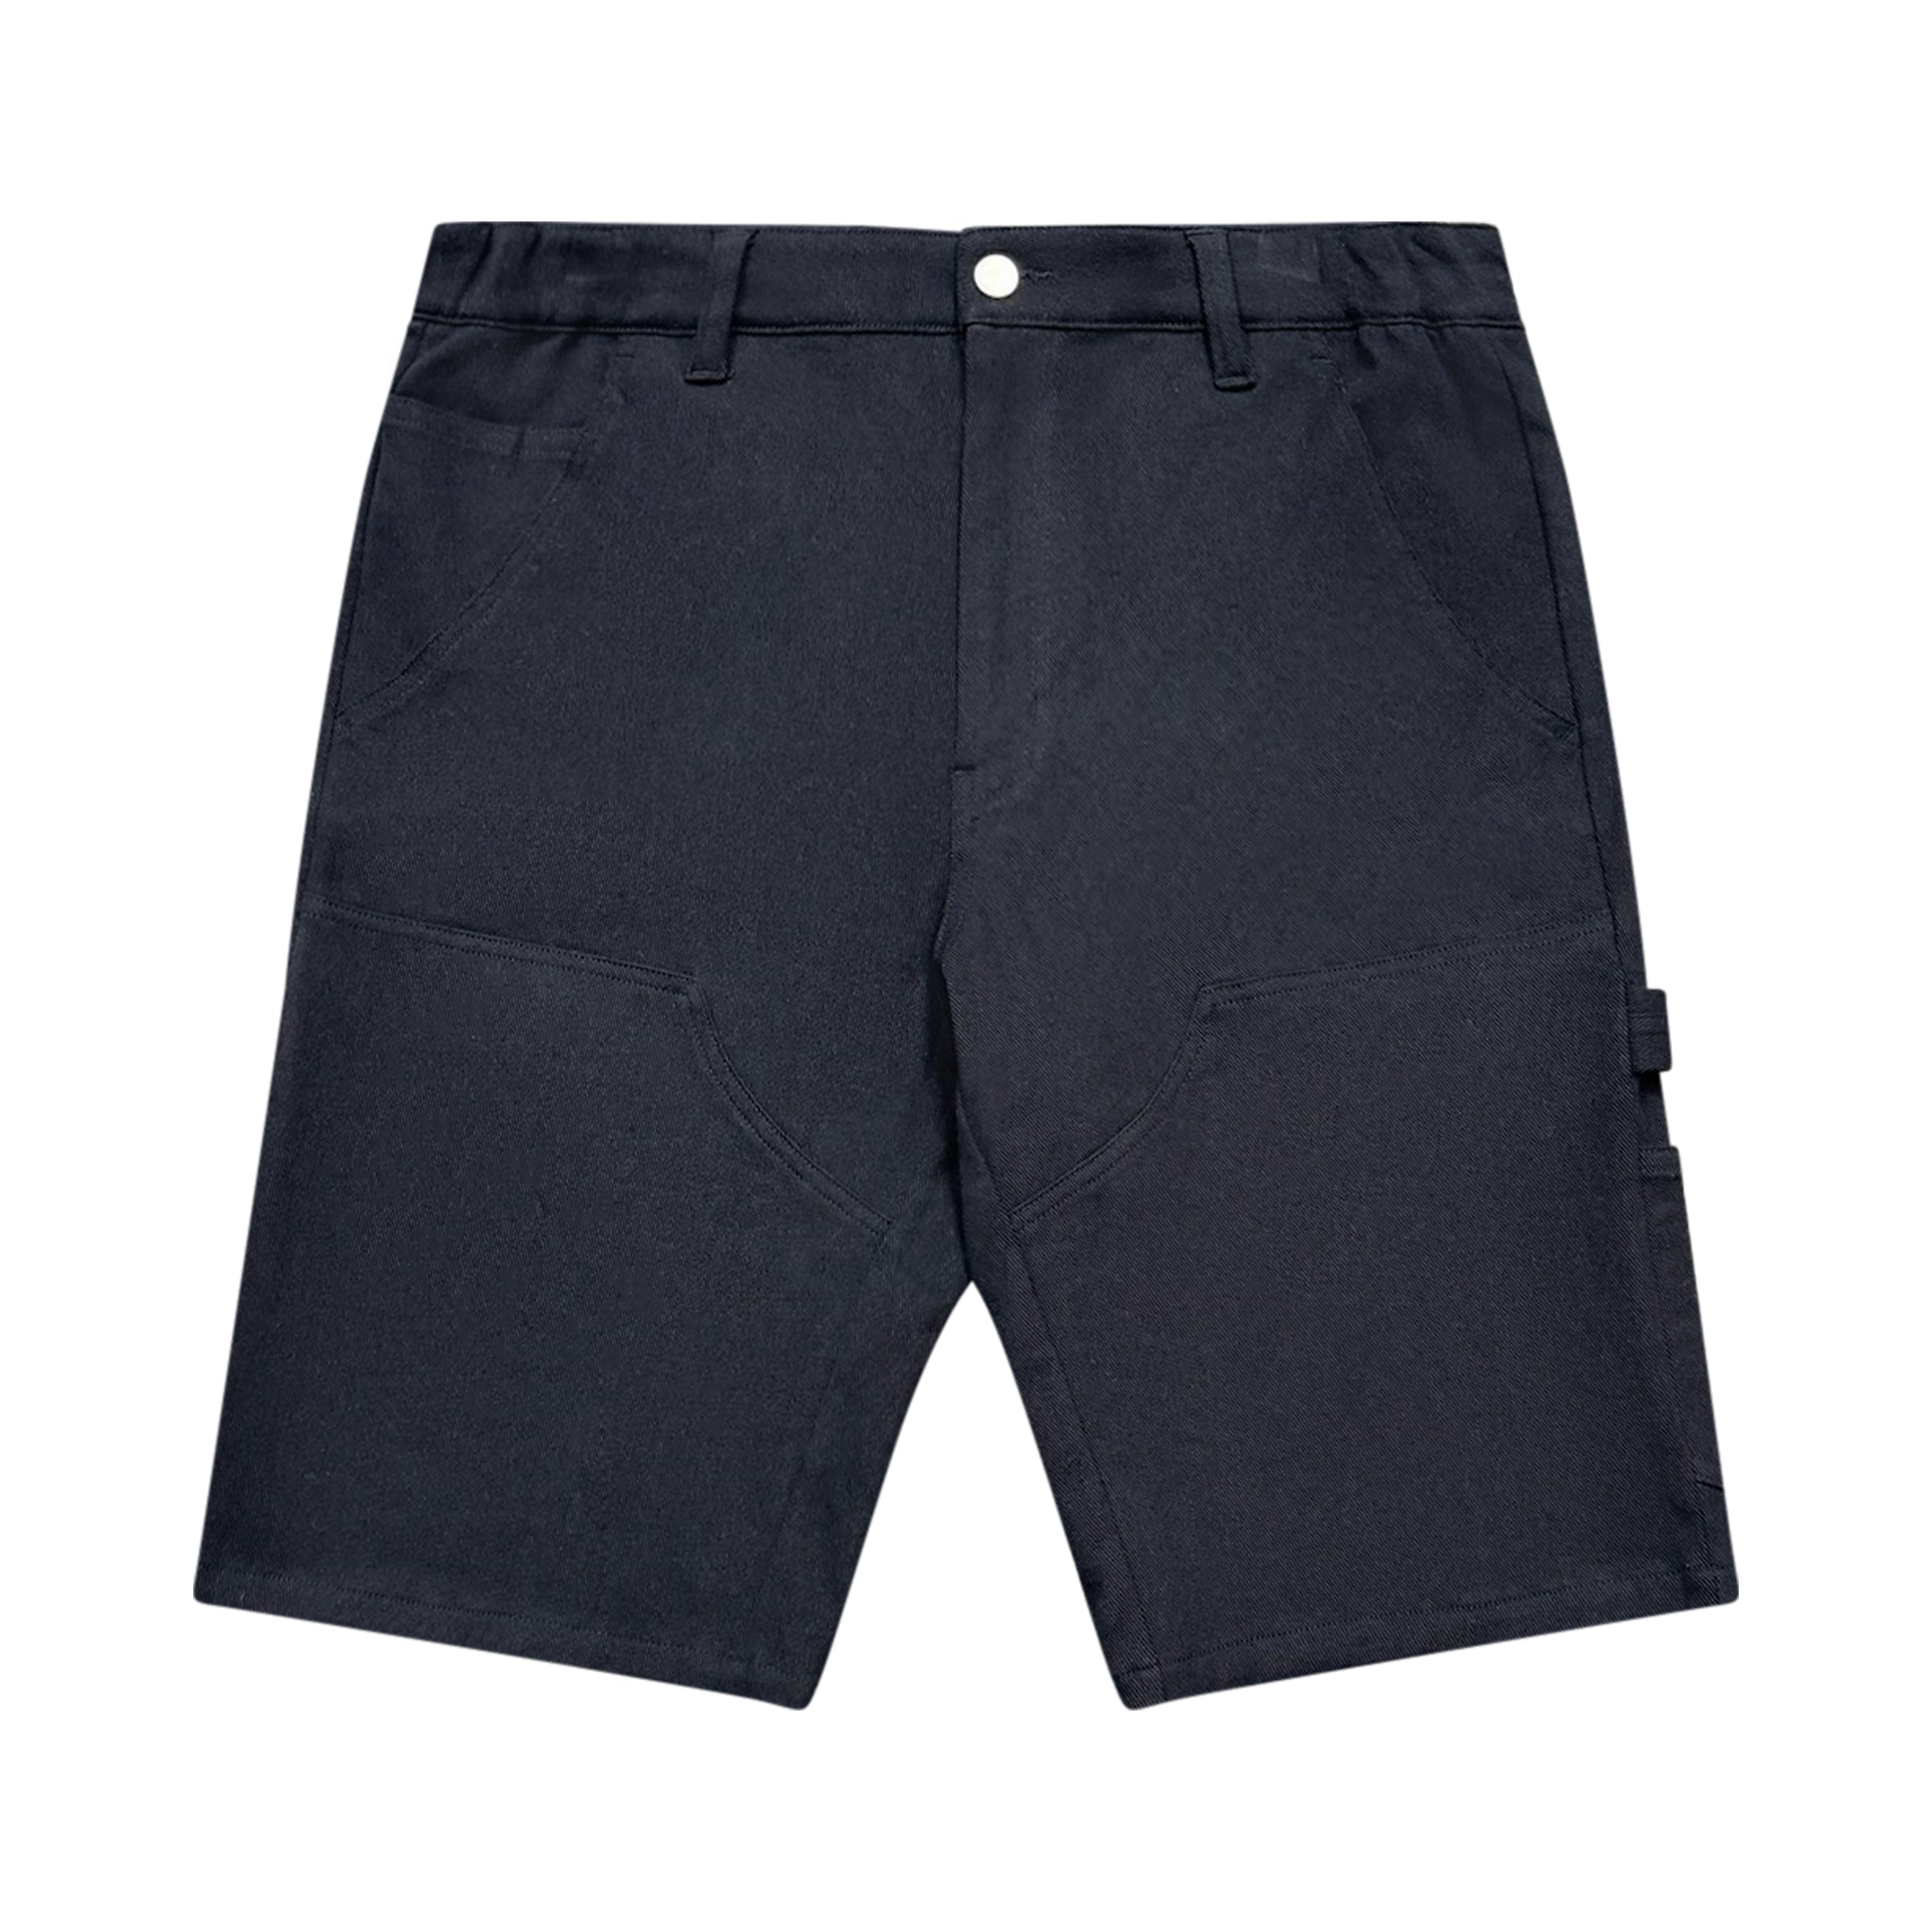 Carpenter Shorts - Black